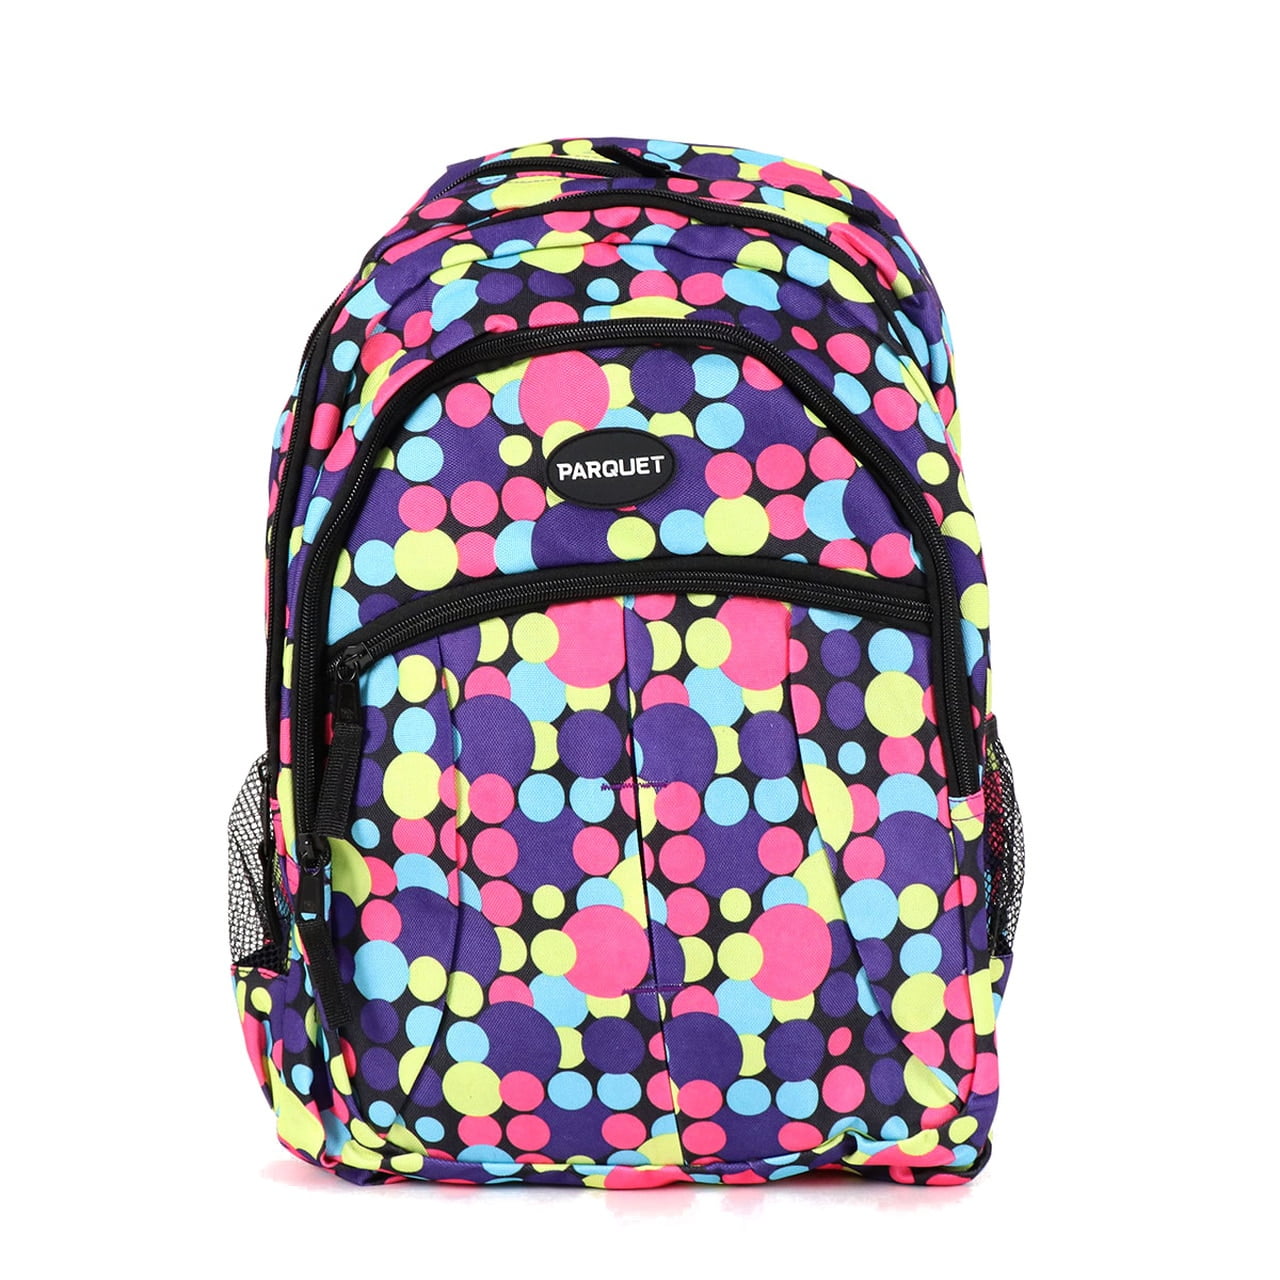 Parquet Novelty Backpack - School knapsacks + Fun Printed Bags ...